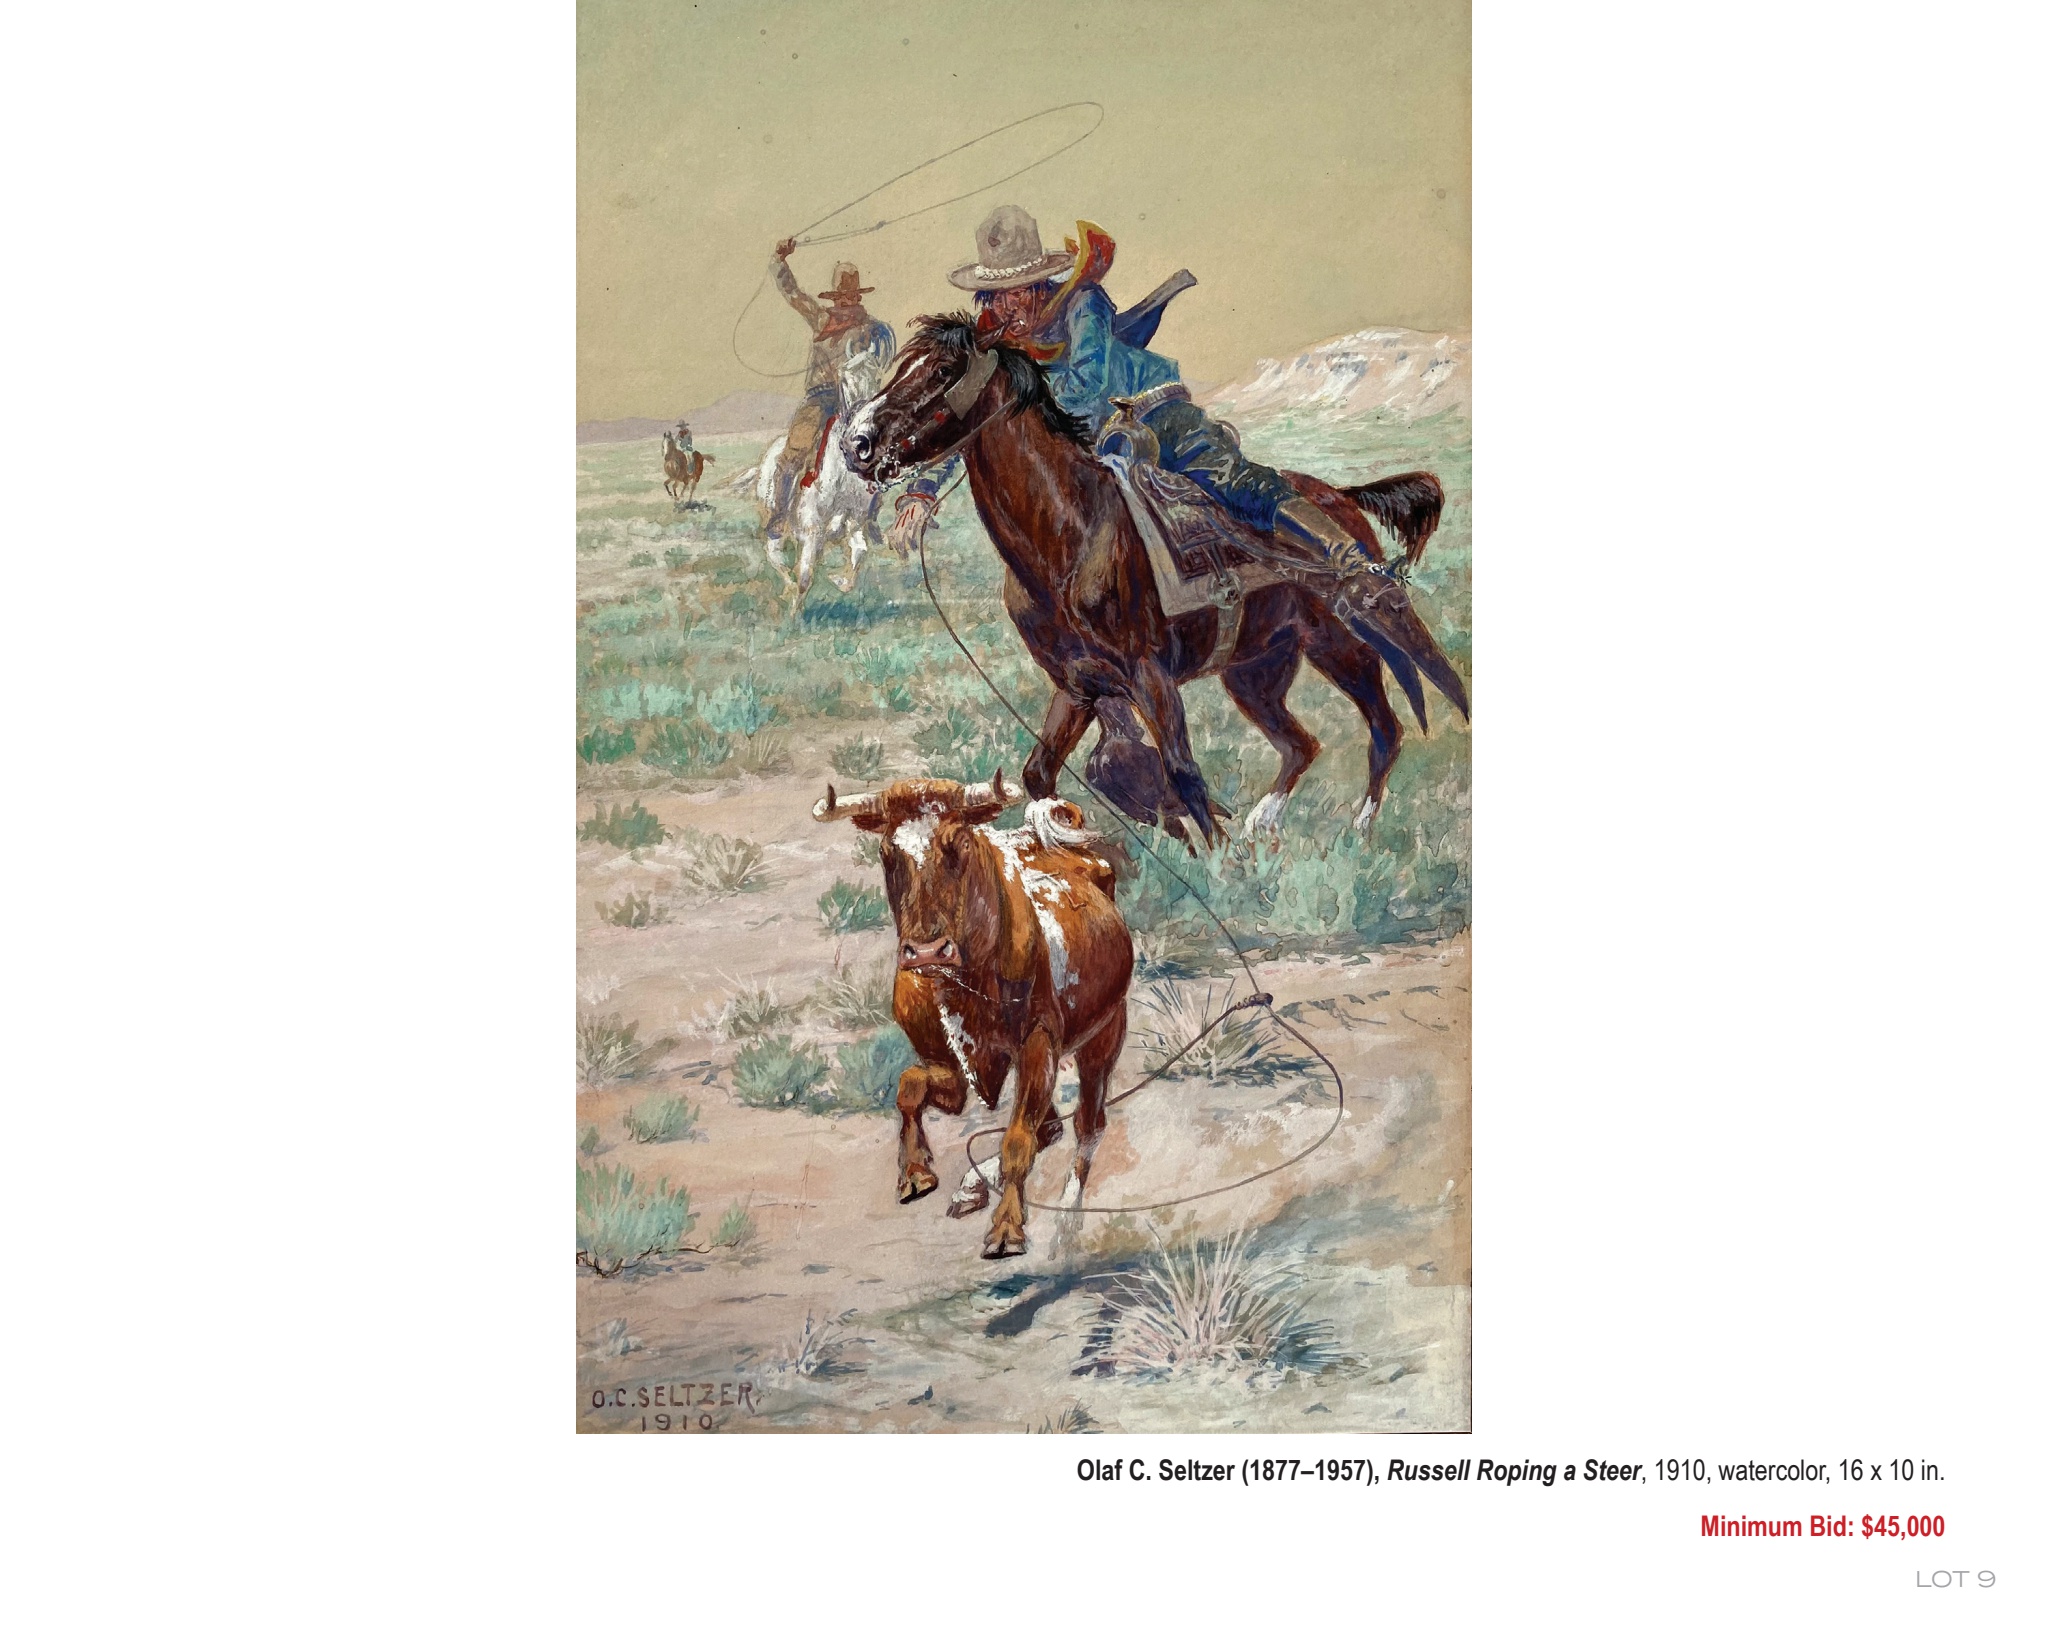 Russell Roping a Steer (1910)